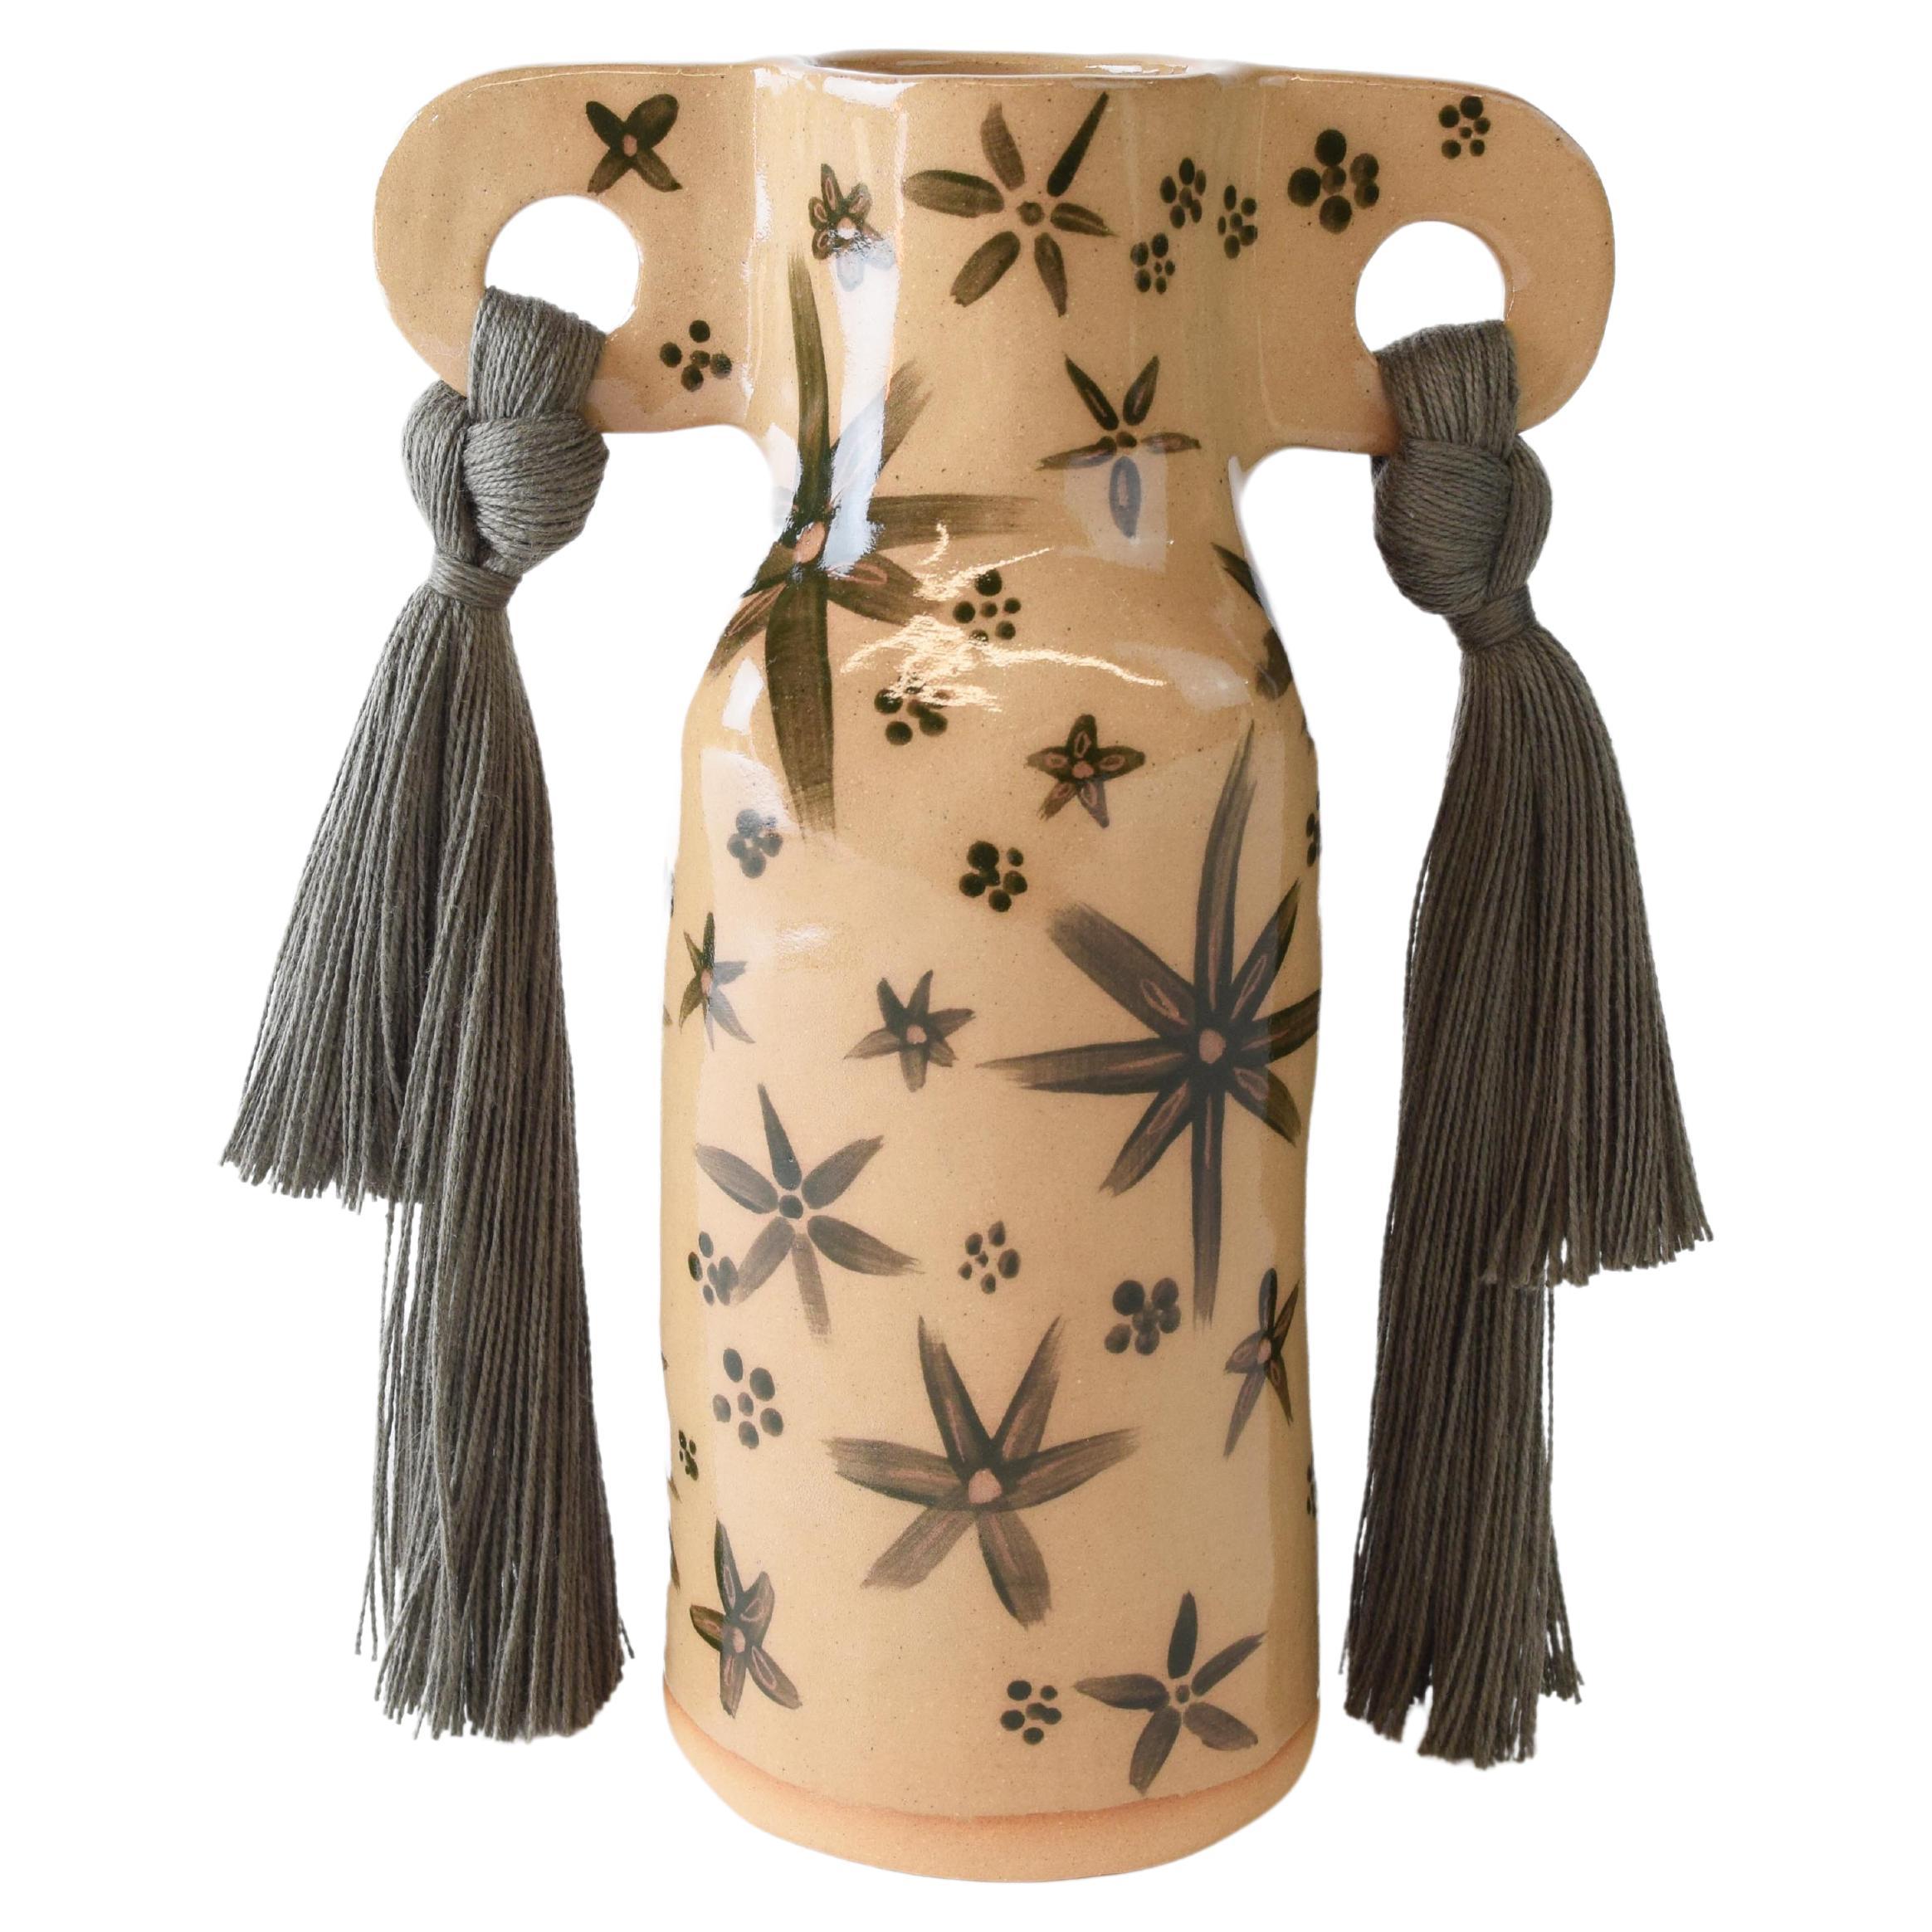 OOAK Handmade Ceramic Vase #606 - Olive Green Hand Glazed Floral & Cotton Braid